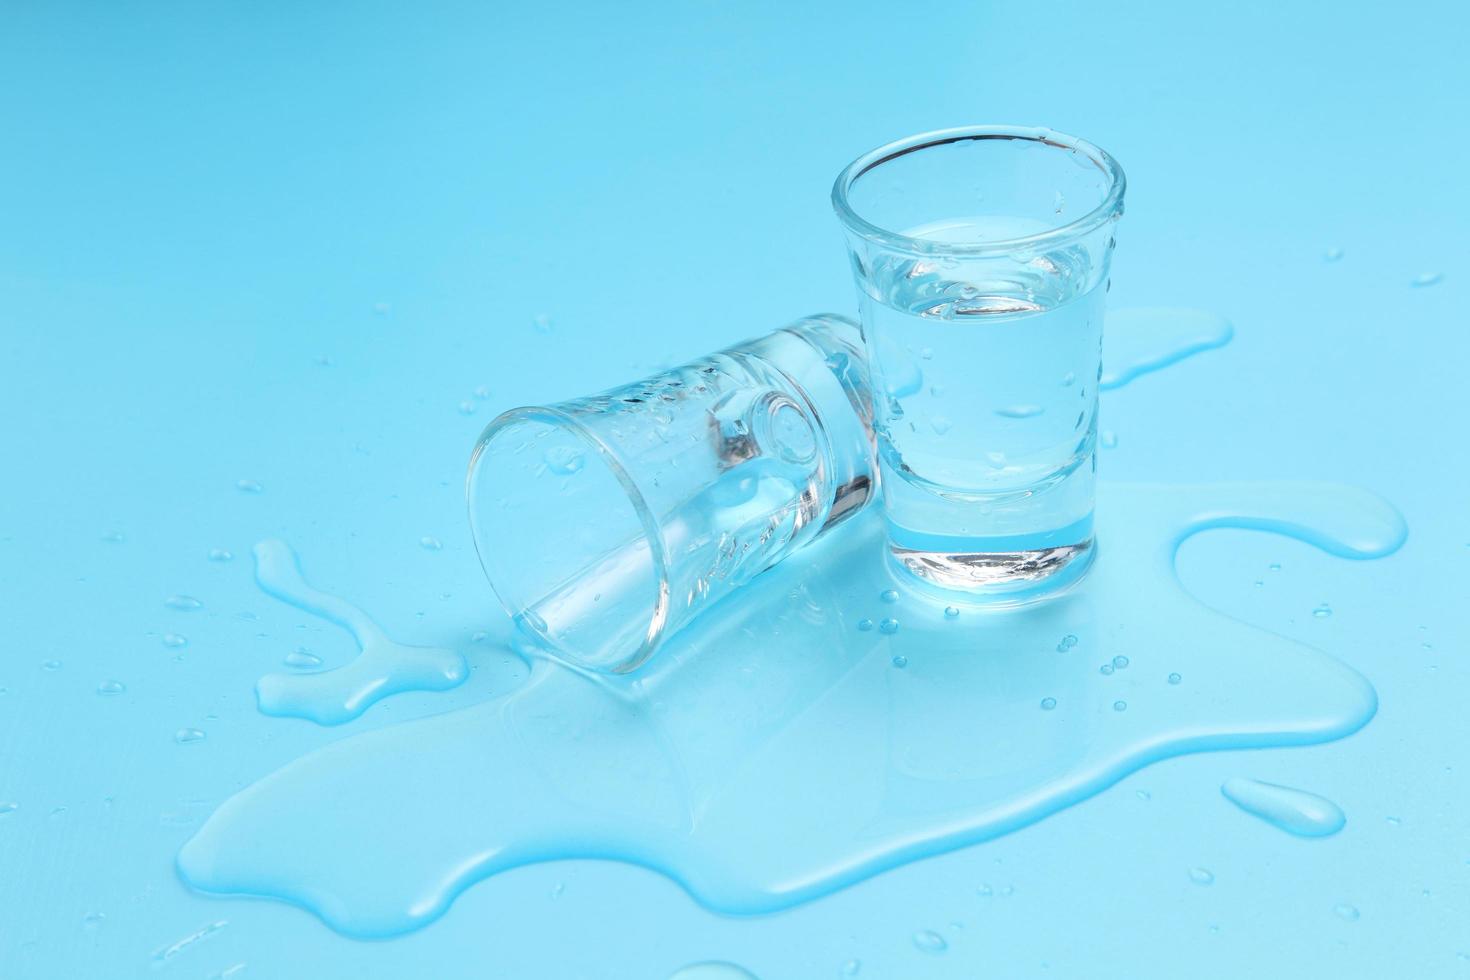 Vodka in shot glass on blue background photo